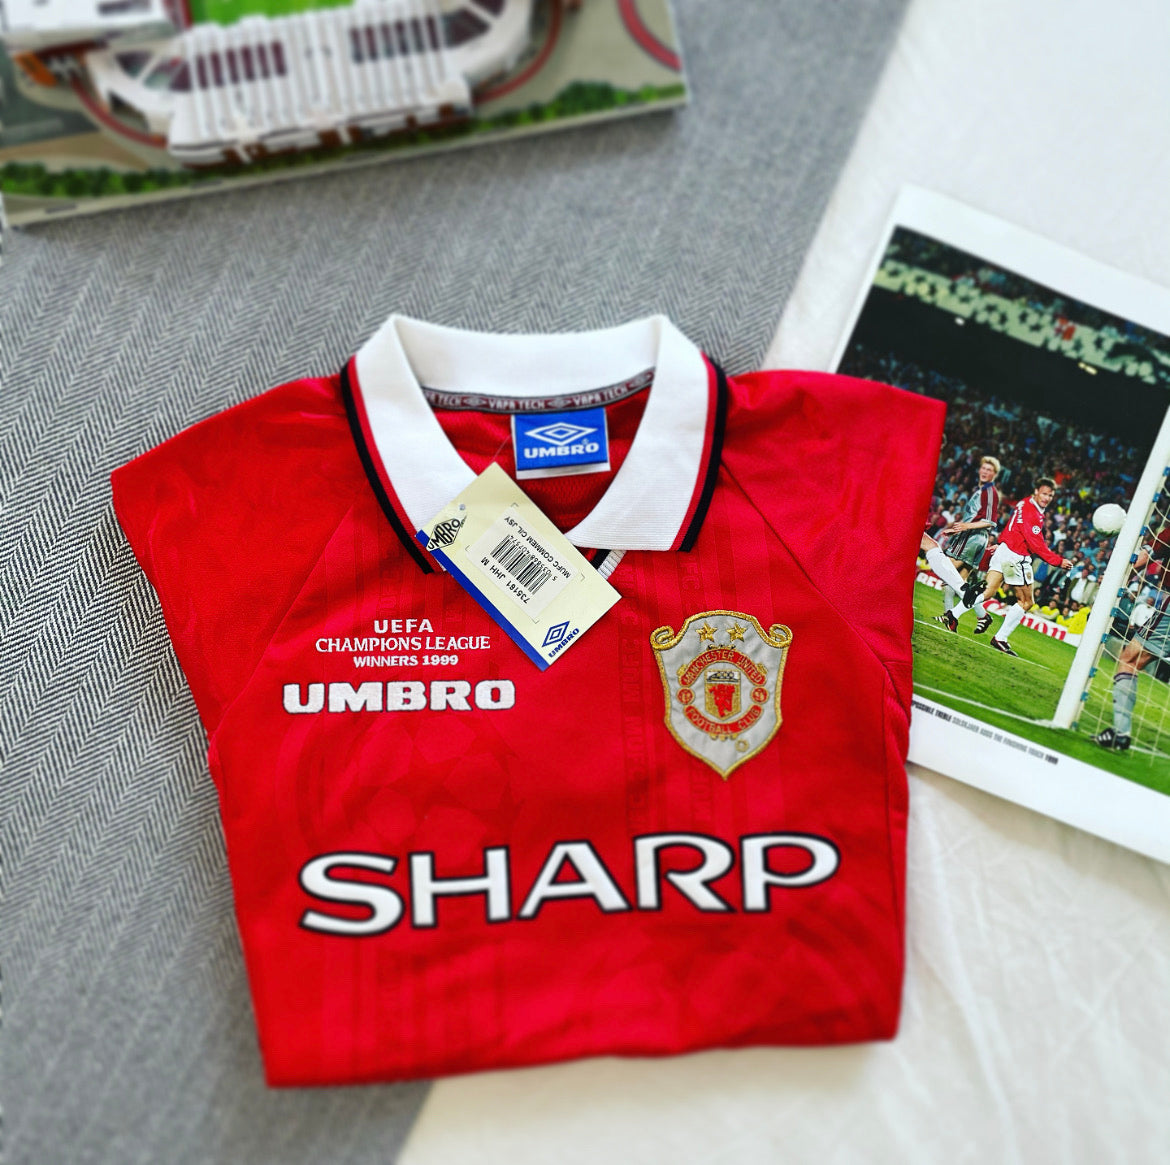 BNWT 1997-99 Manchester United European ‘Treble’ Shirt | BNWT | M